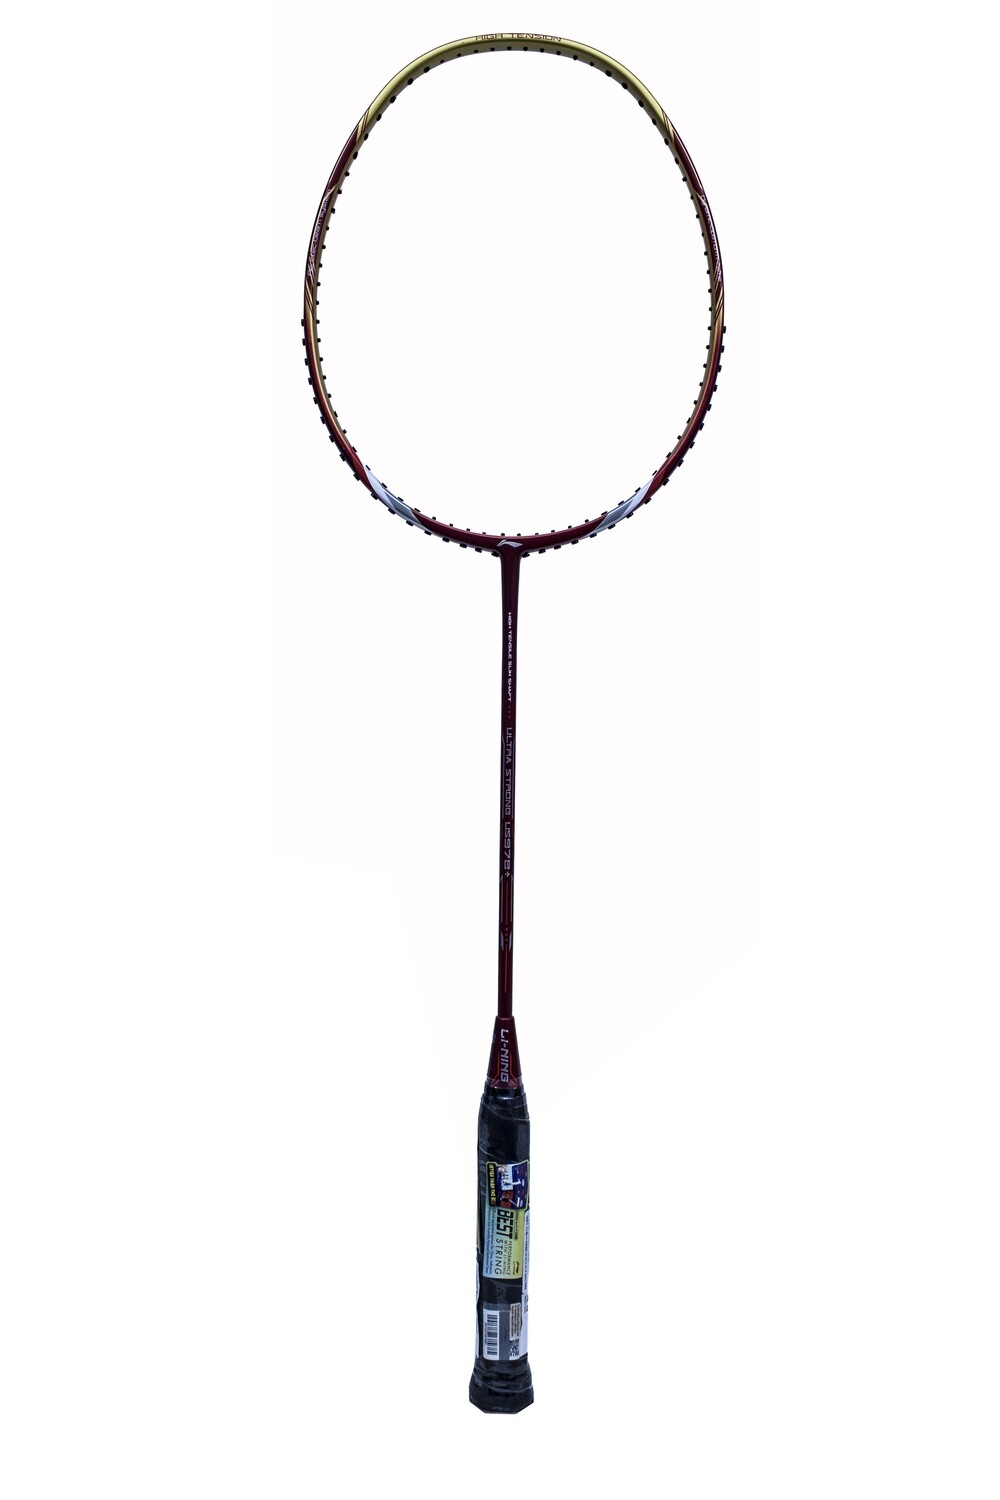 LI-NING Ultra Strong US 978+ Badminton Racquet -